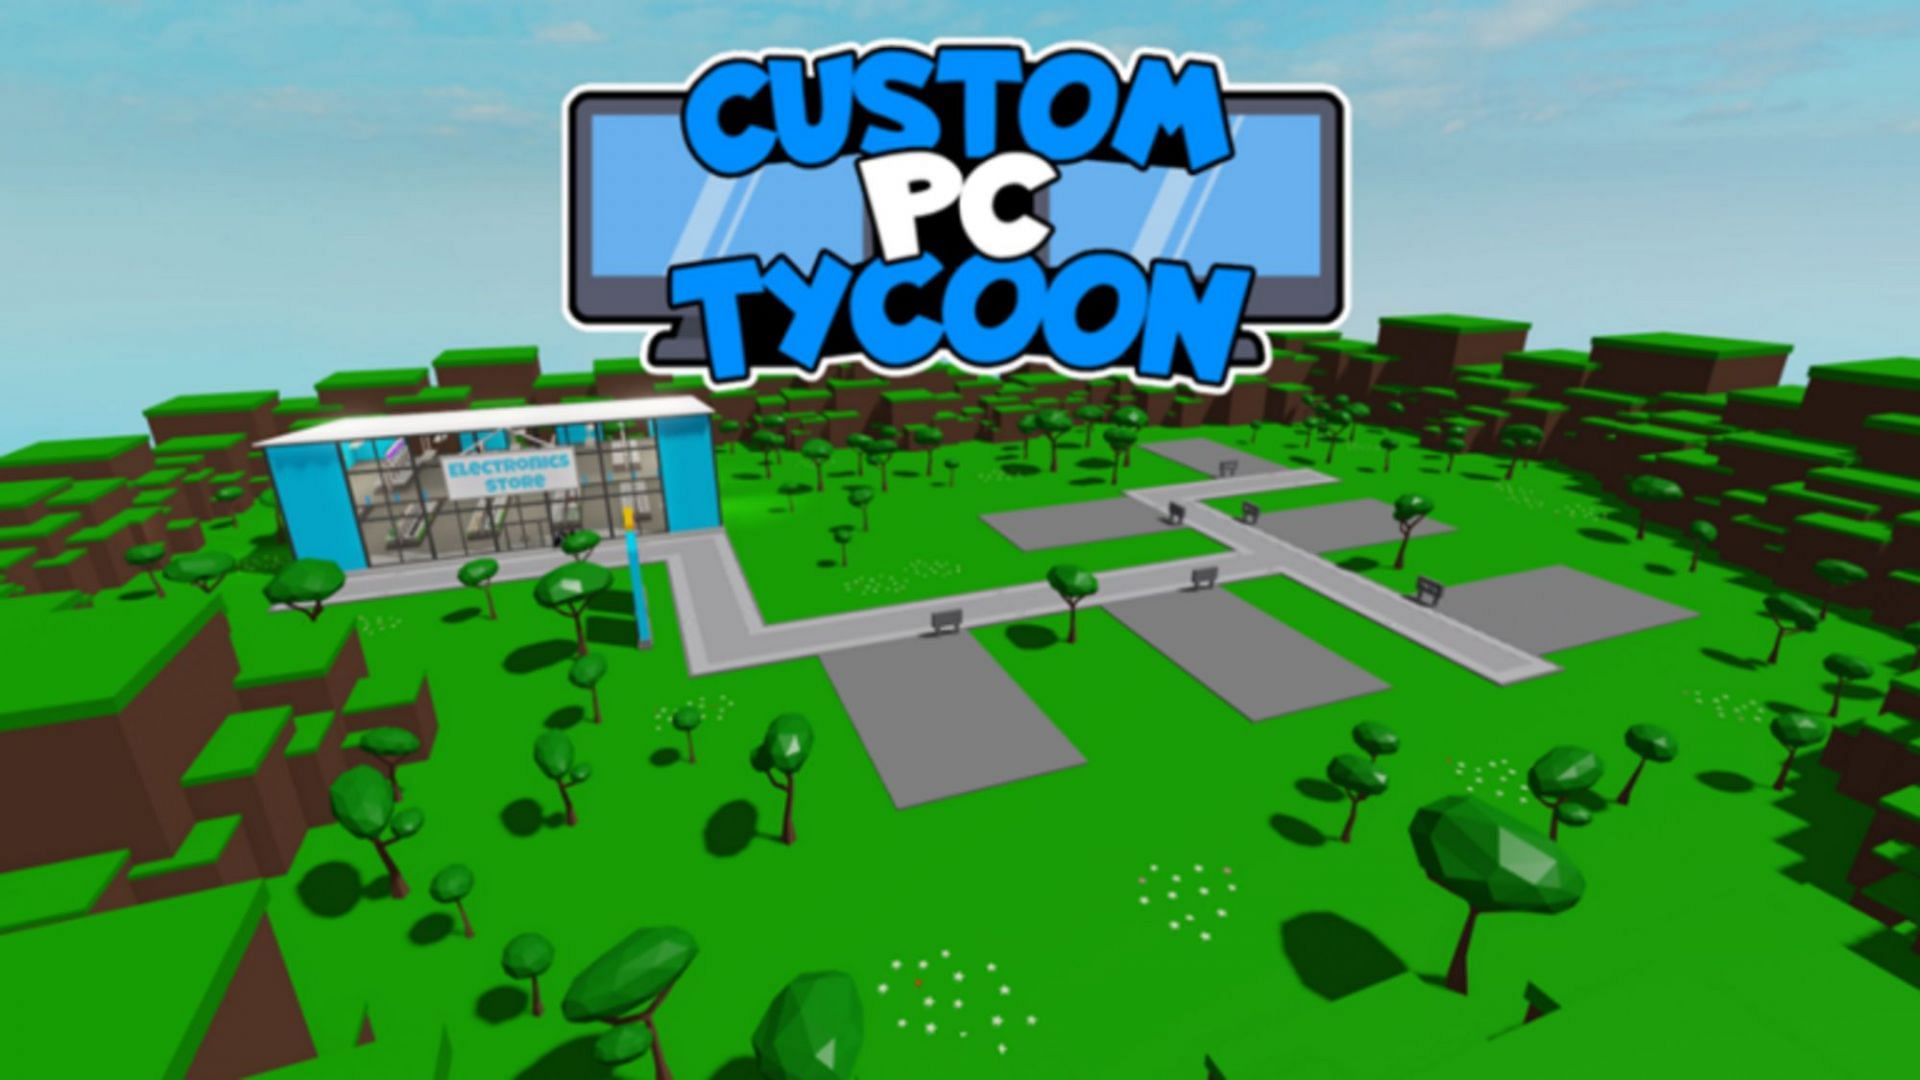 Custom update. Custom PC Tycoon коды. Custom PC Tycoon codes Roblox. Кастом ПК ТАЙКУН. Custom PC Tycoon.